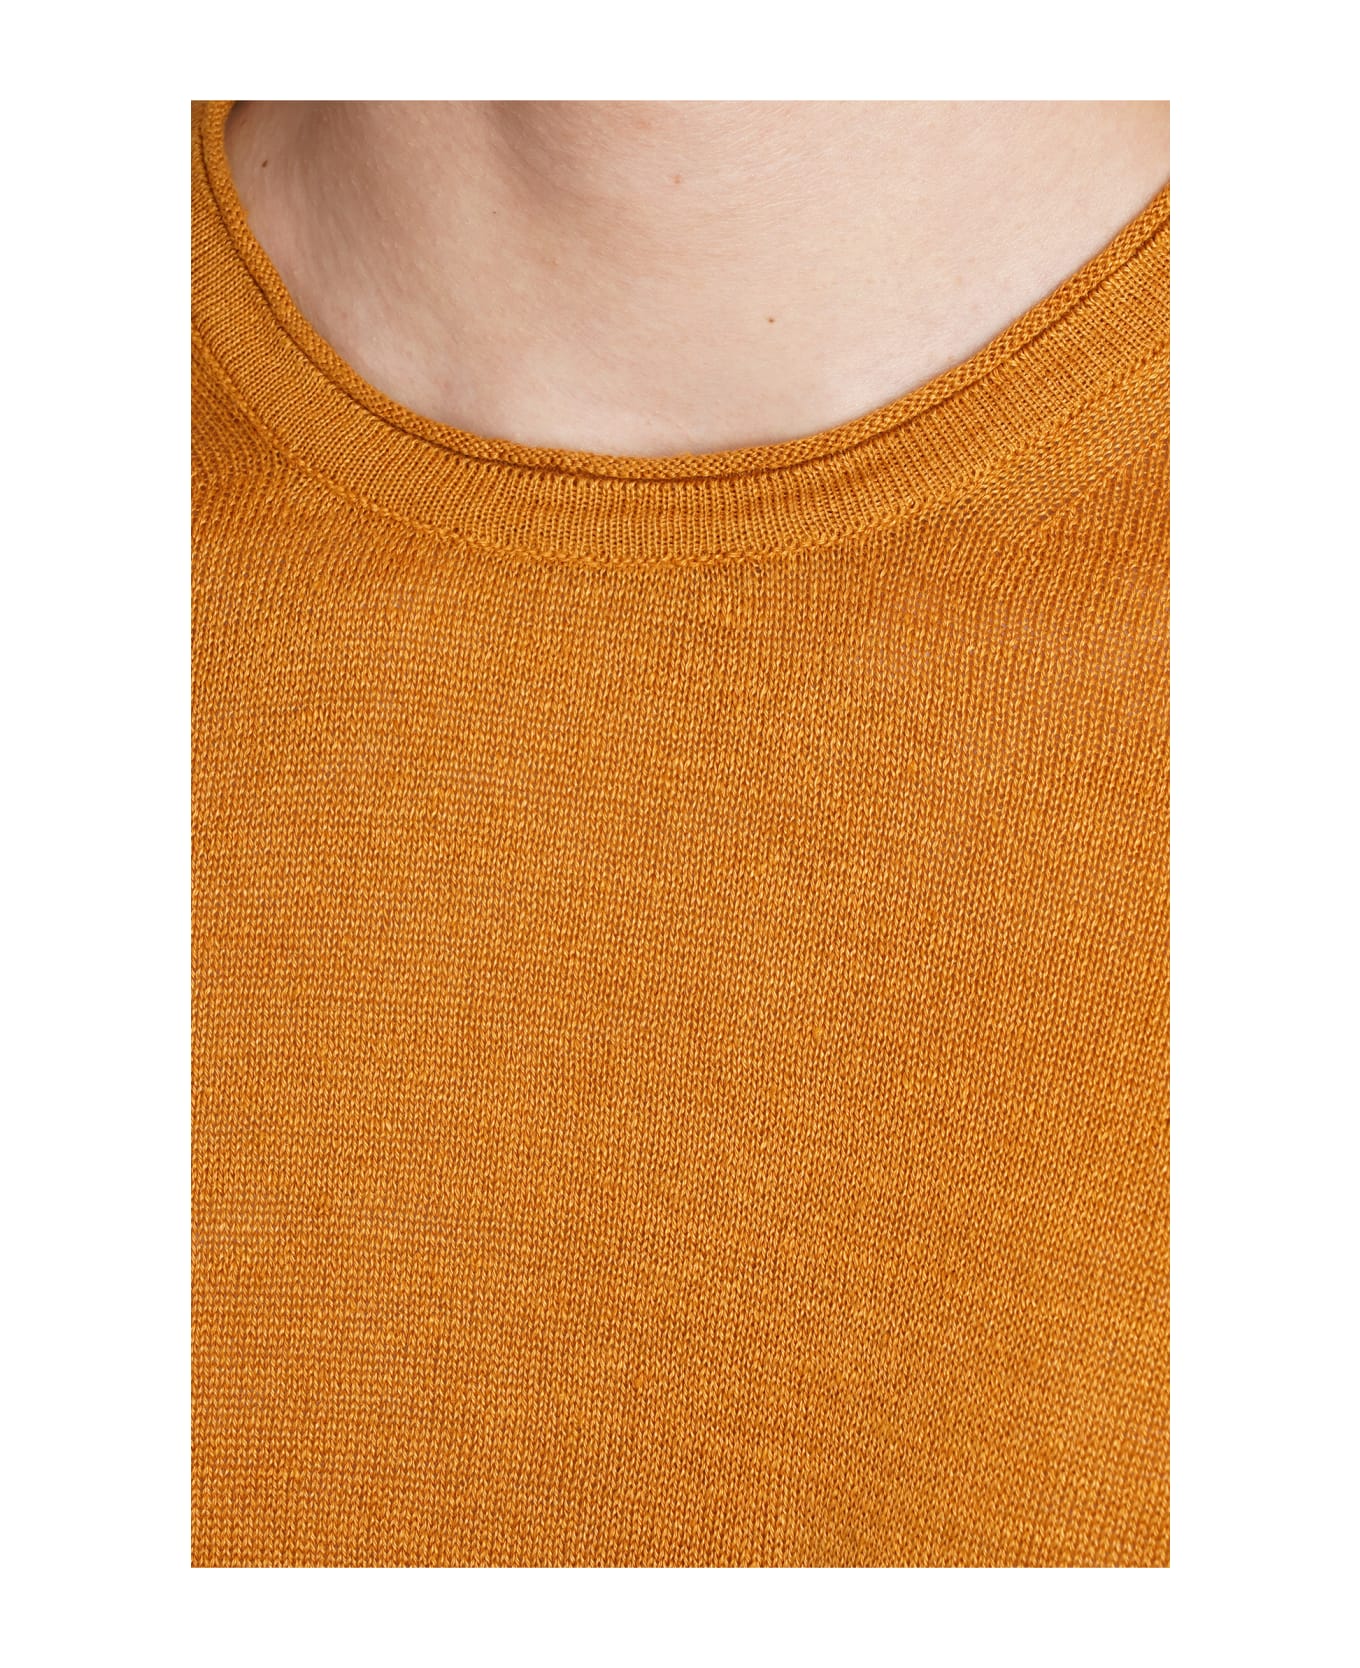 Roberto Collina T-shirt In Orange Linen